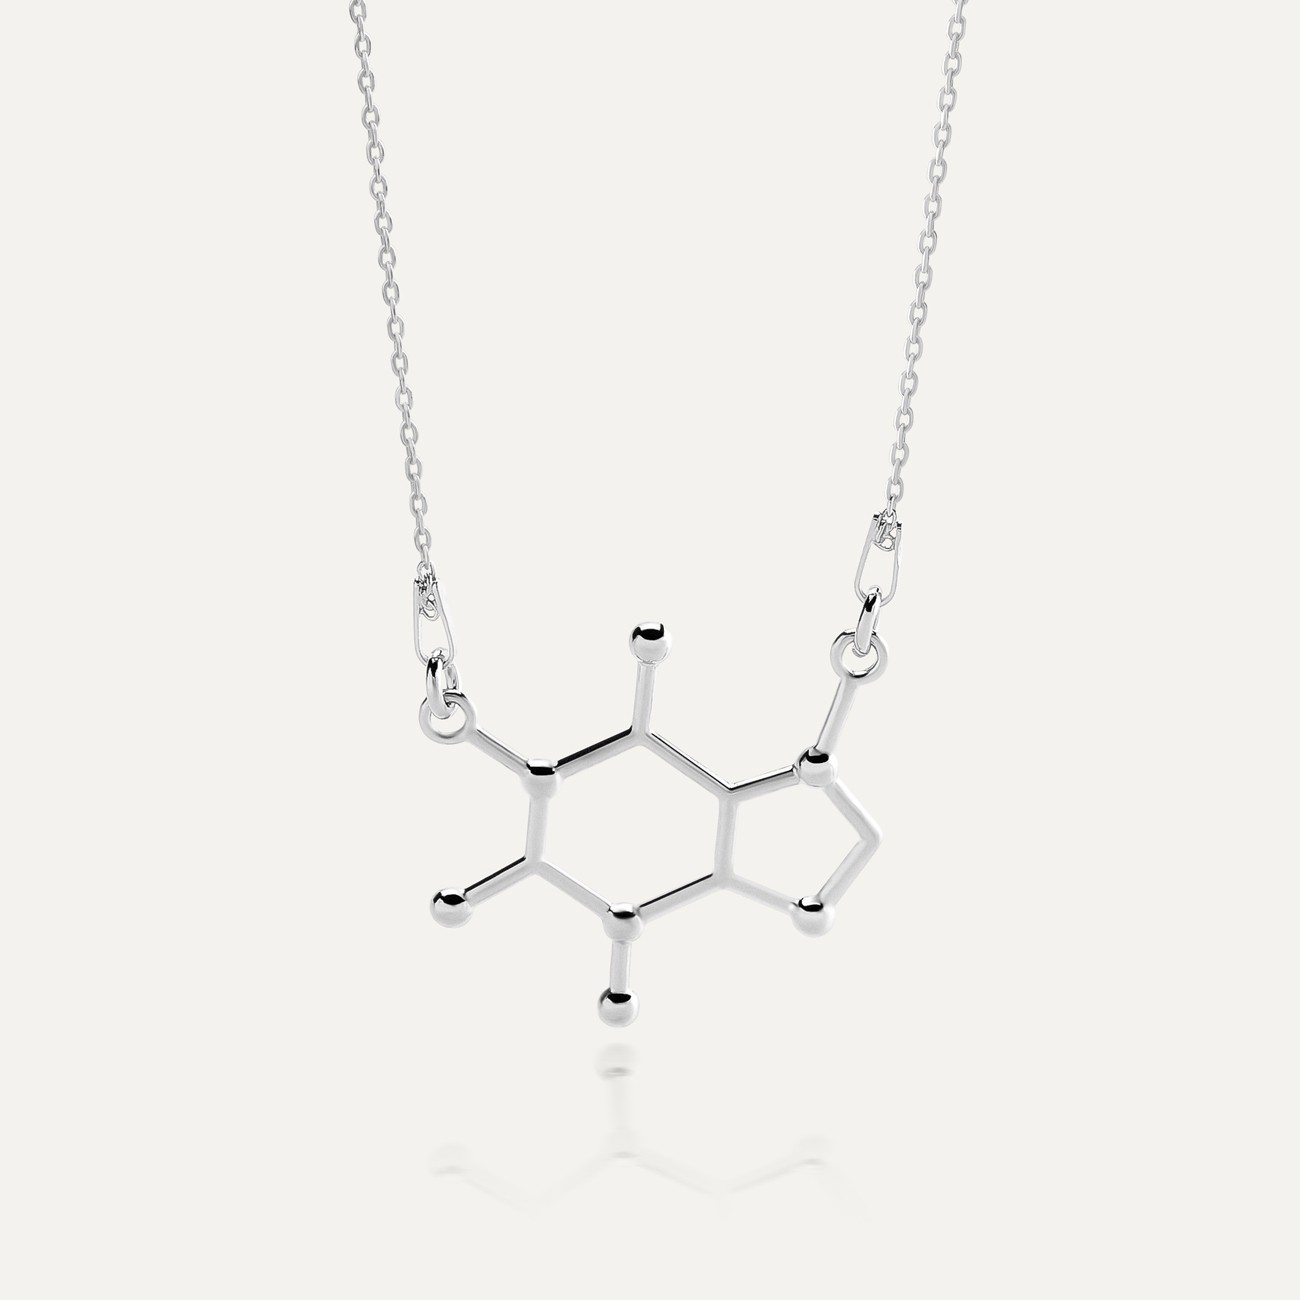 Necklace CAFFEINE chemical formula